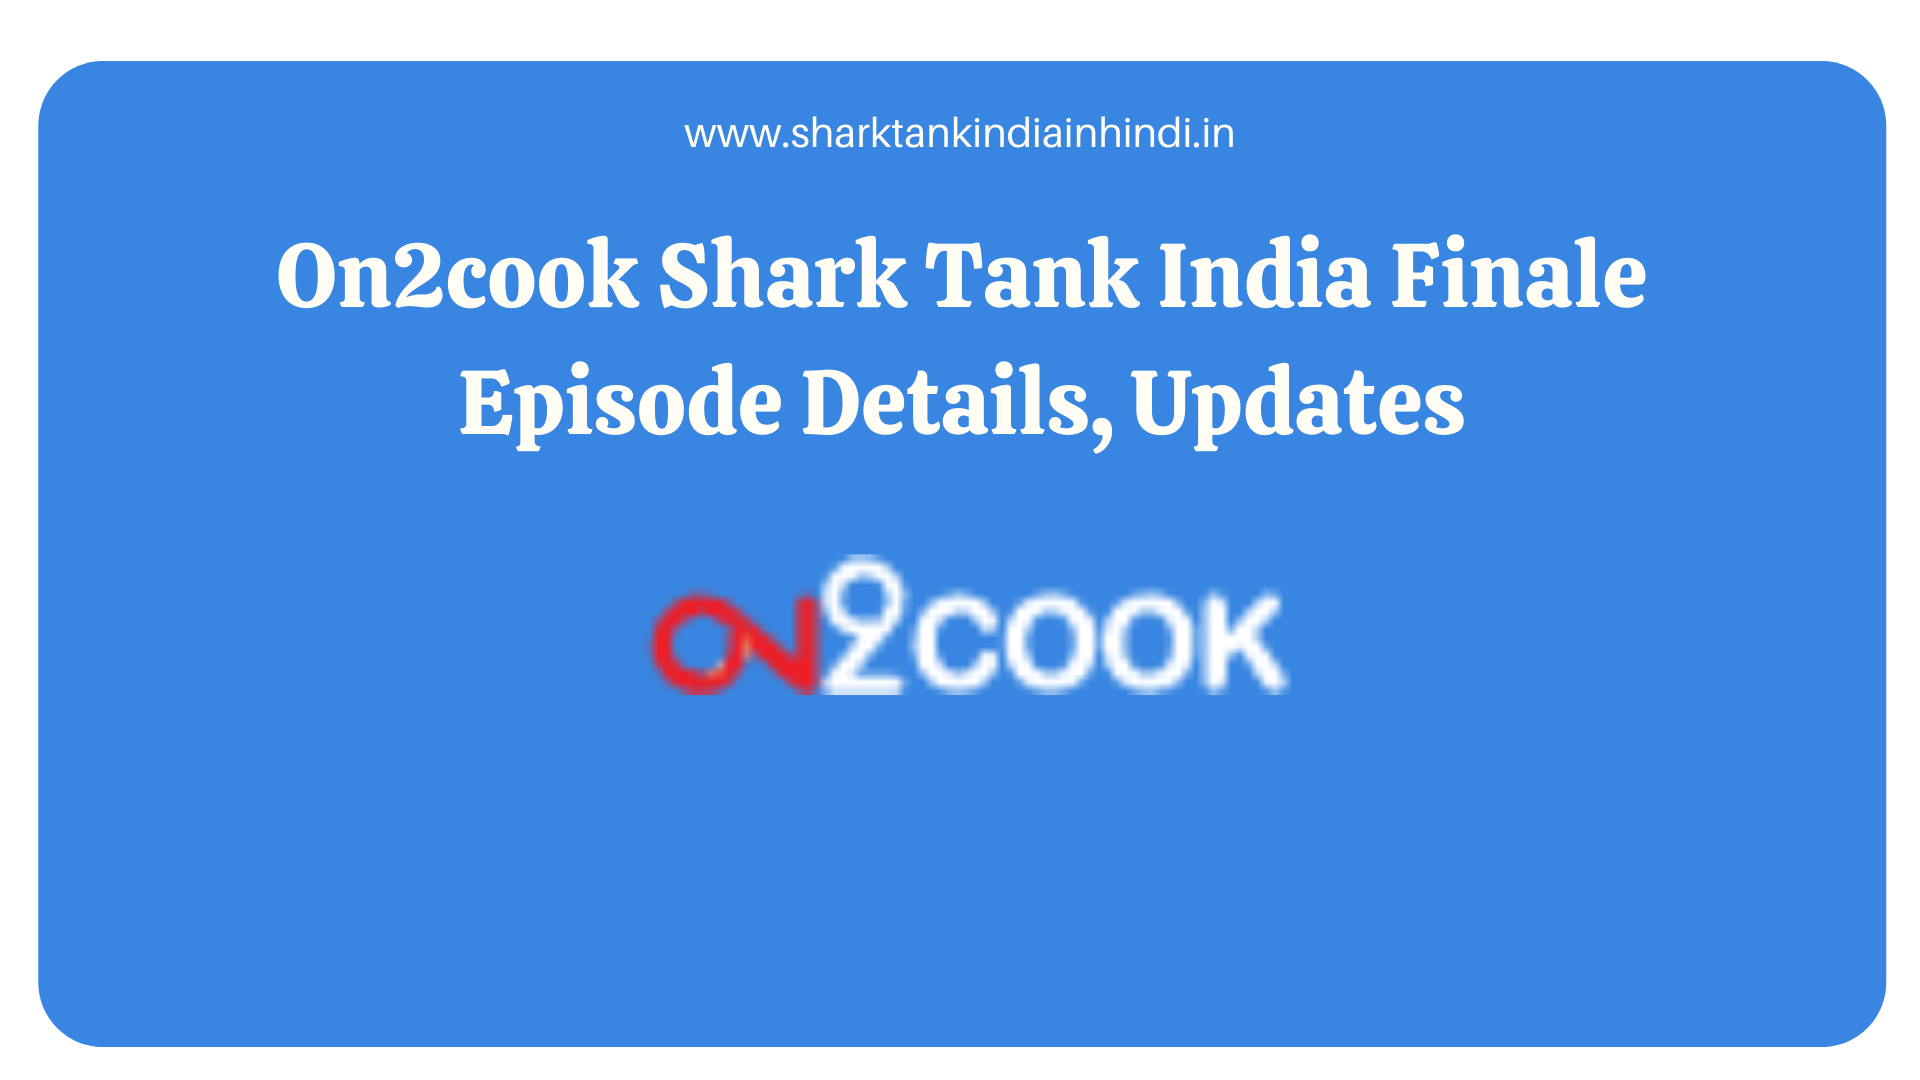 On2cook Shark Tank India Finale Episode Details, Updates